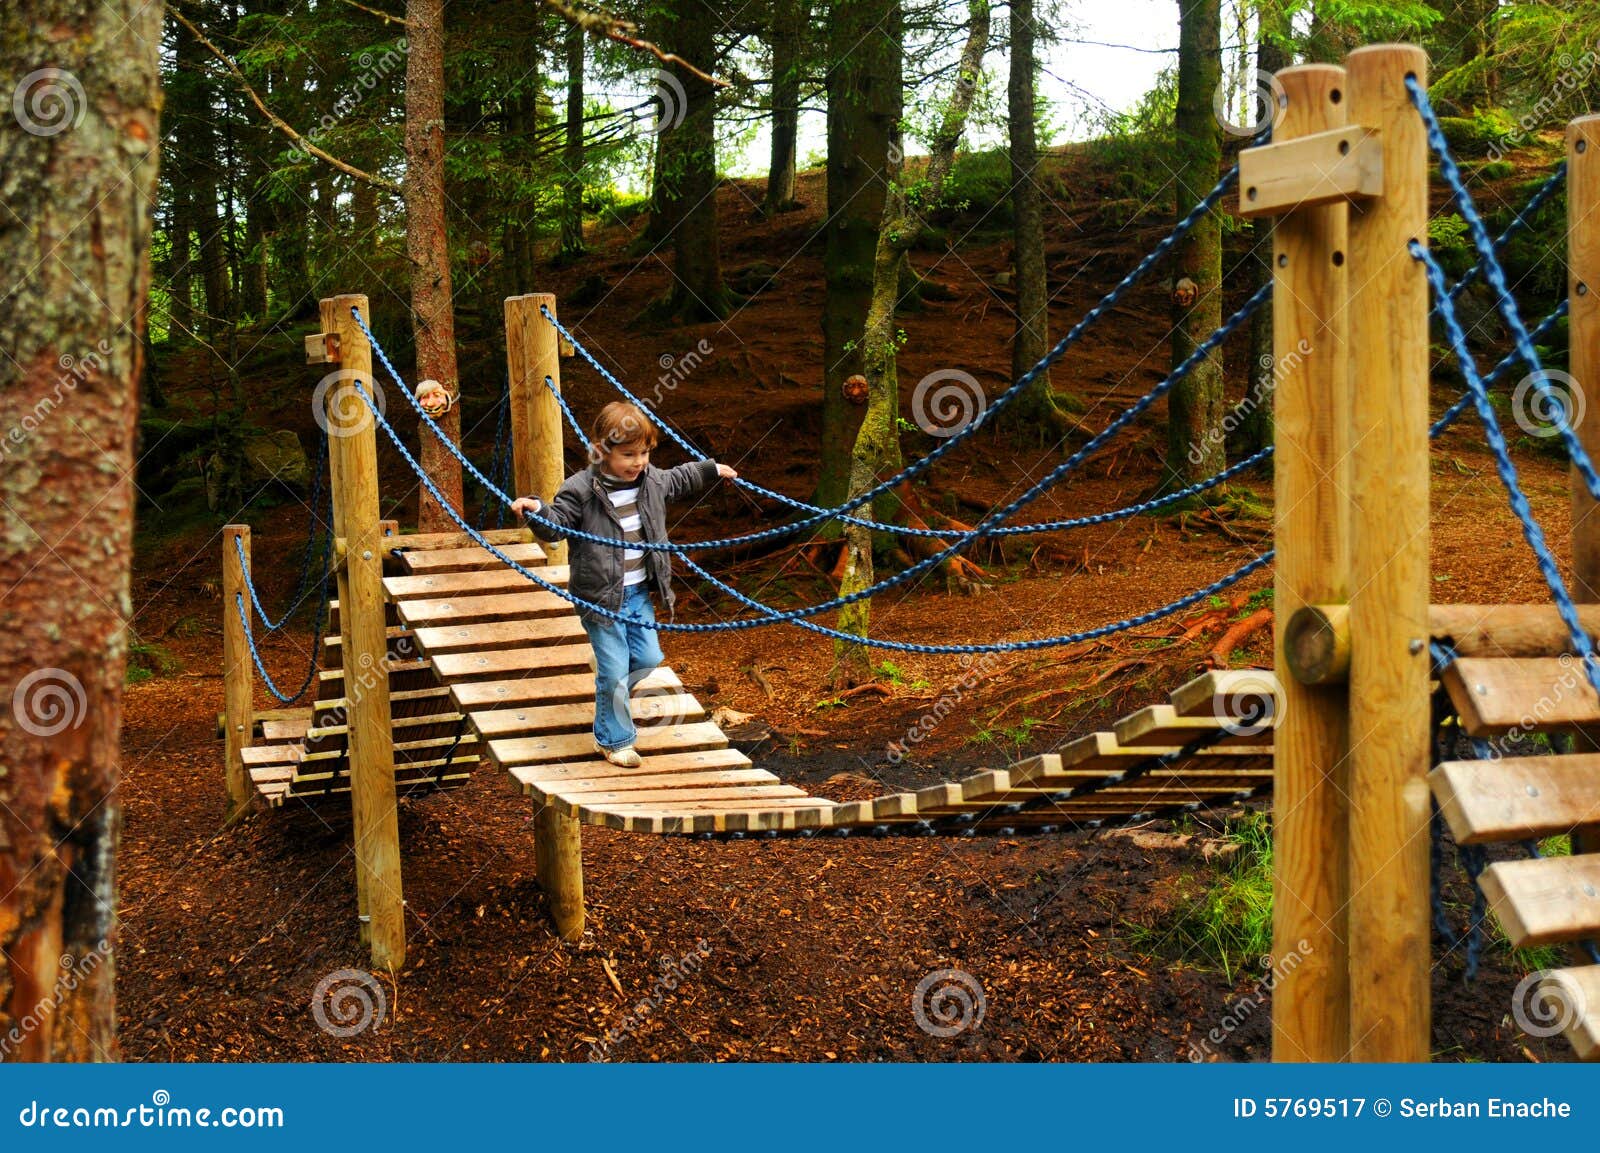 2,329 Playground Rope Bridge Stock Photos - Free & Royalty-Free